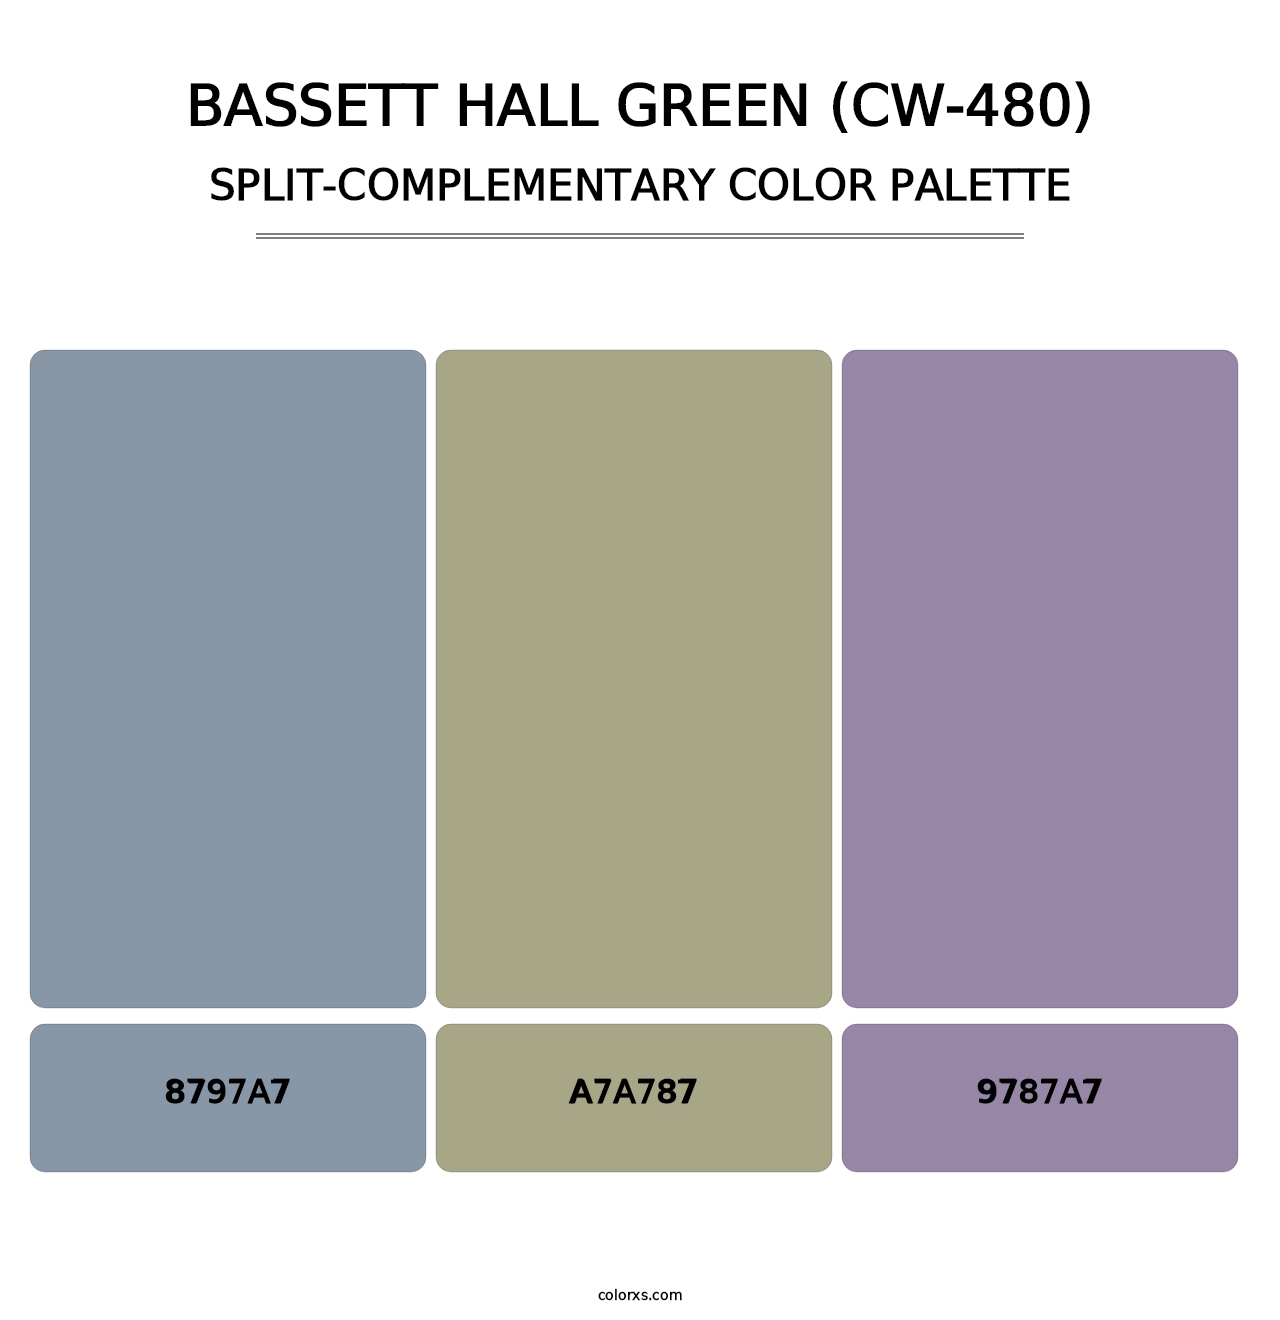 Bassett Hall Green (CW-480) - Split-Complementary Color Palette